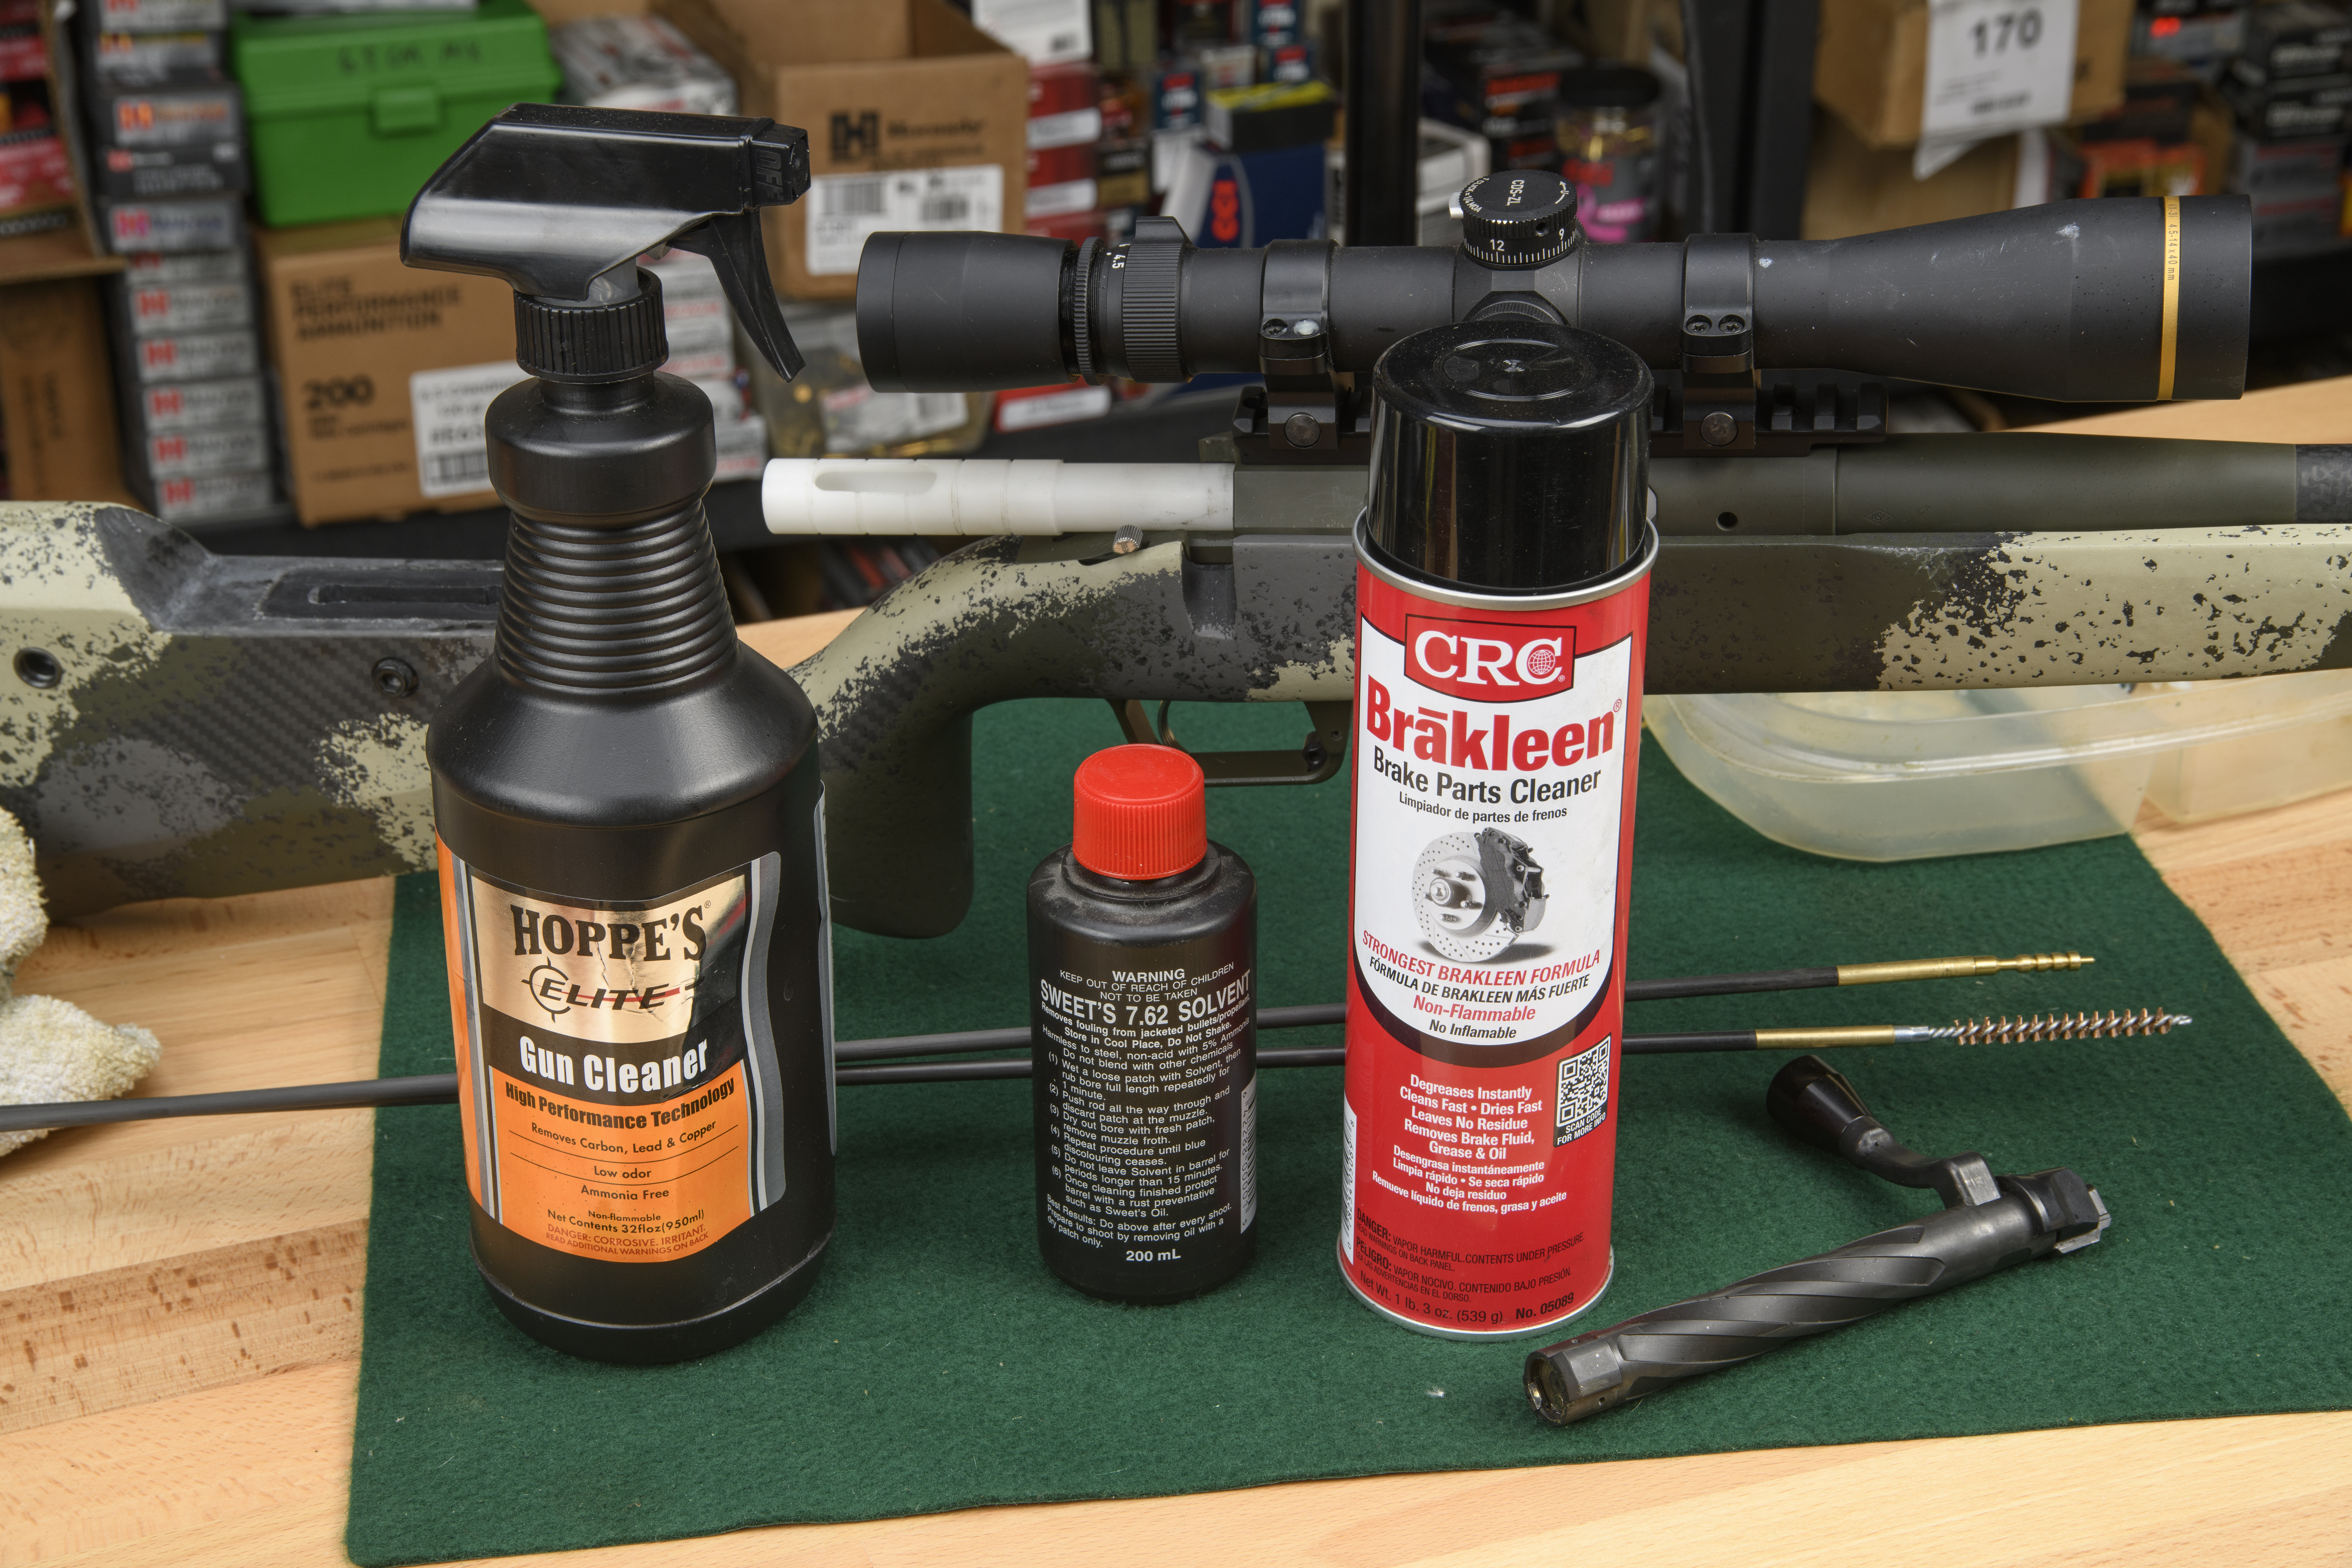 A spray bottle of Hoppe's Elite gun cleaner, Sweet's solvent, and Brakleen brake parts cleaner.